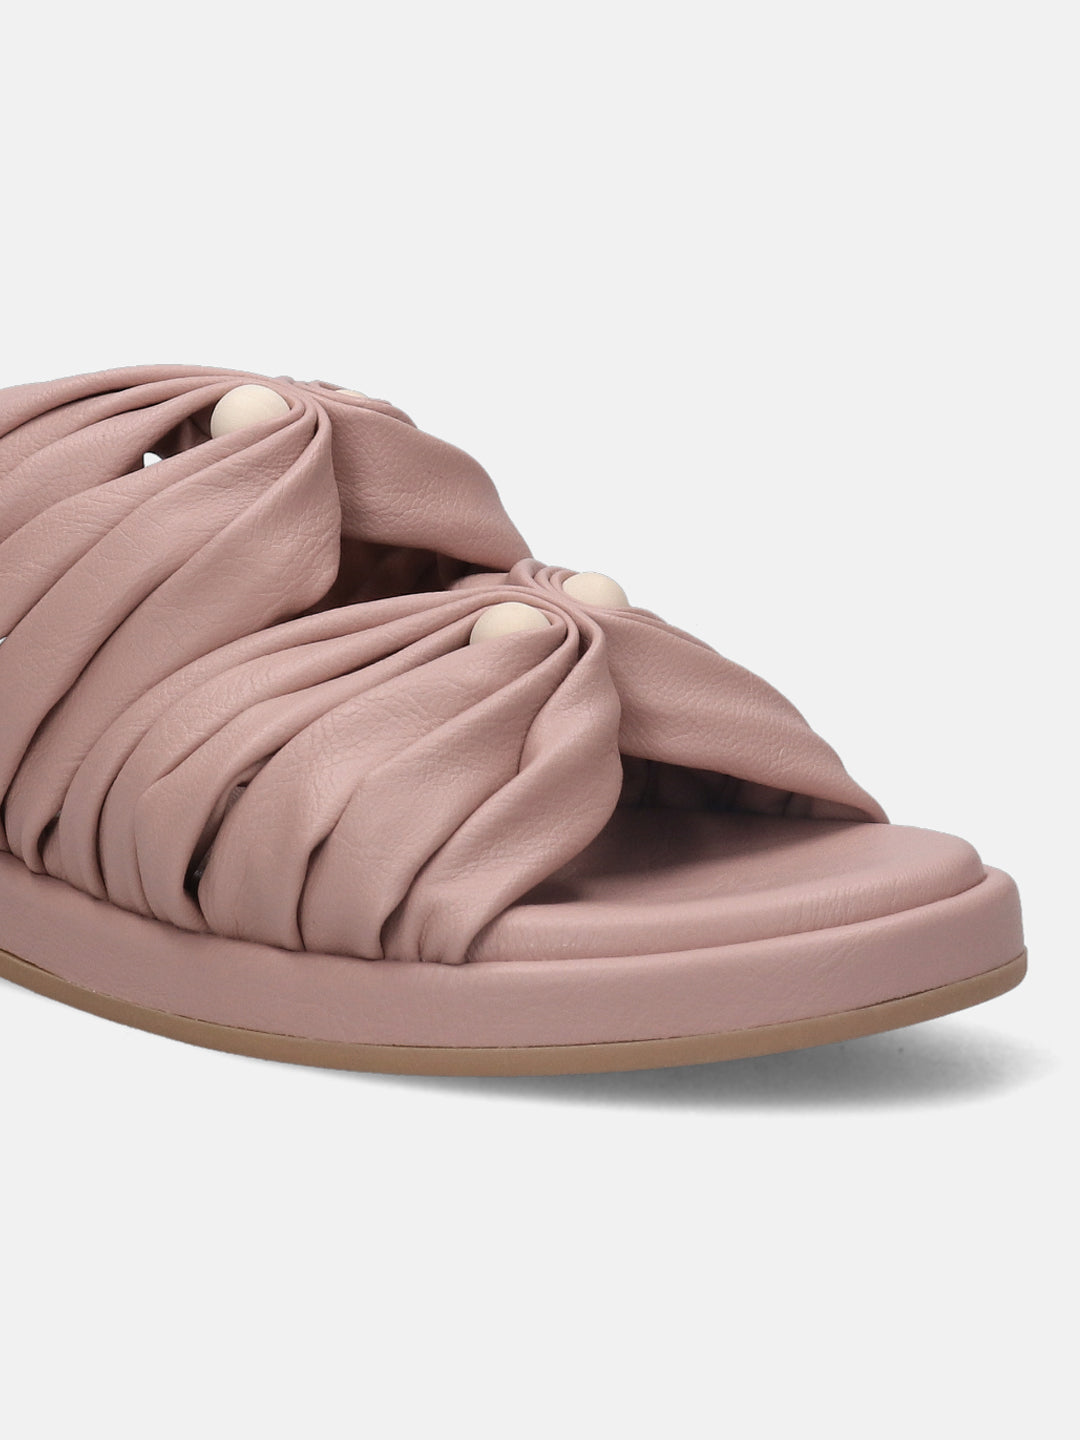 Ravenna Rose Pink Flat Sandals - BAGATT